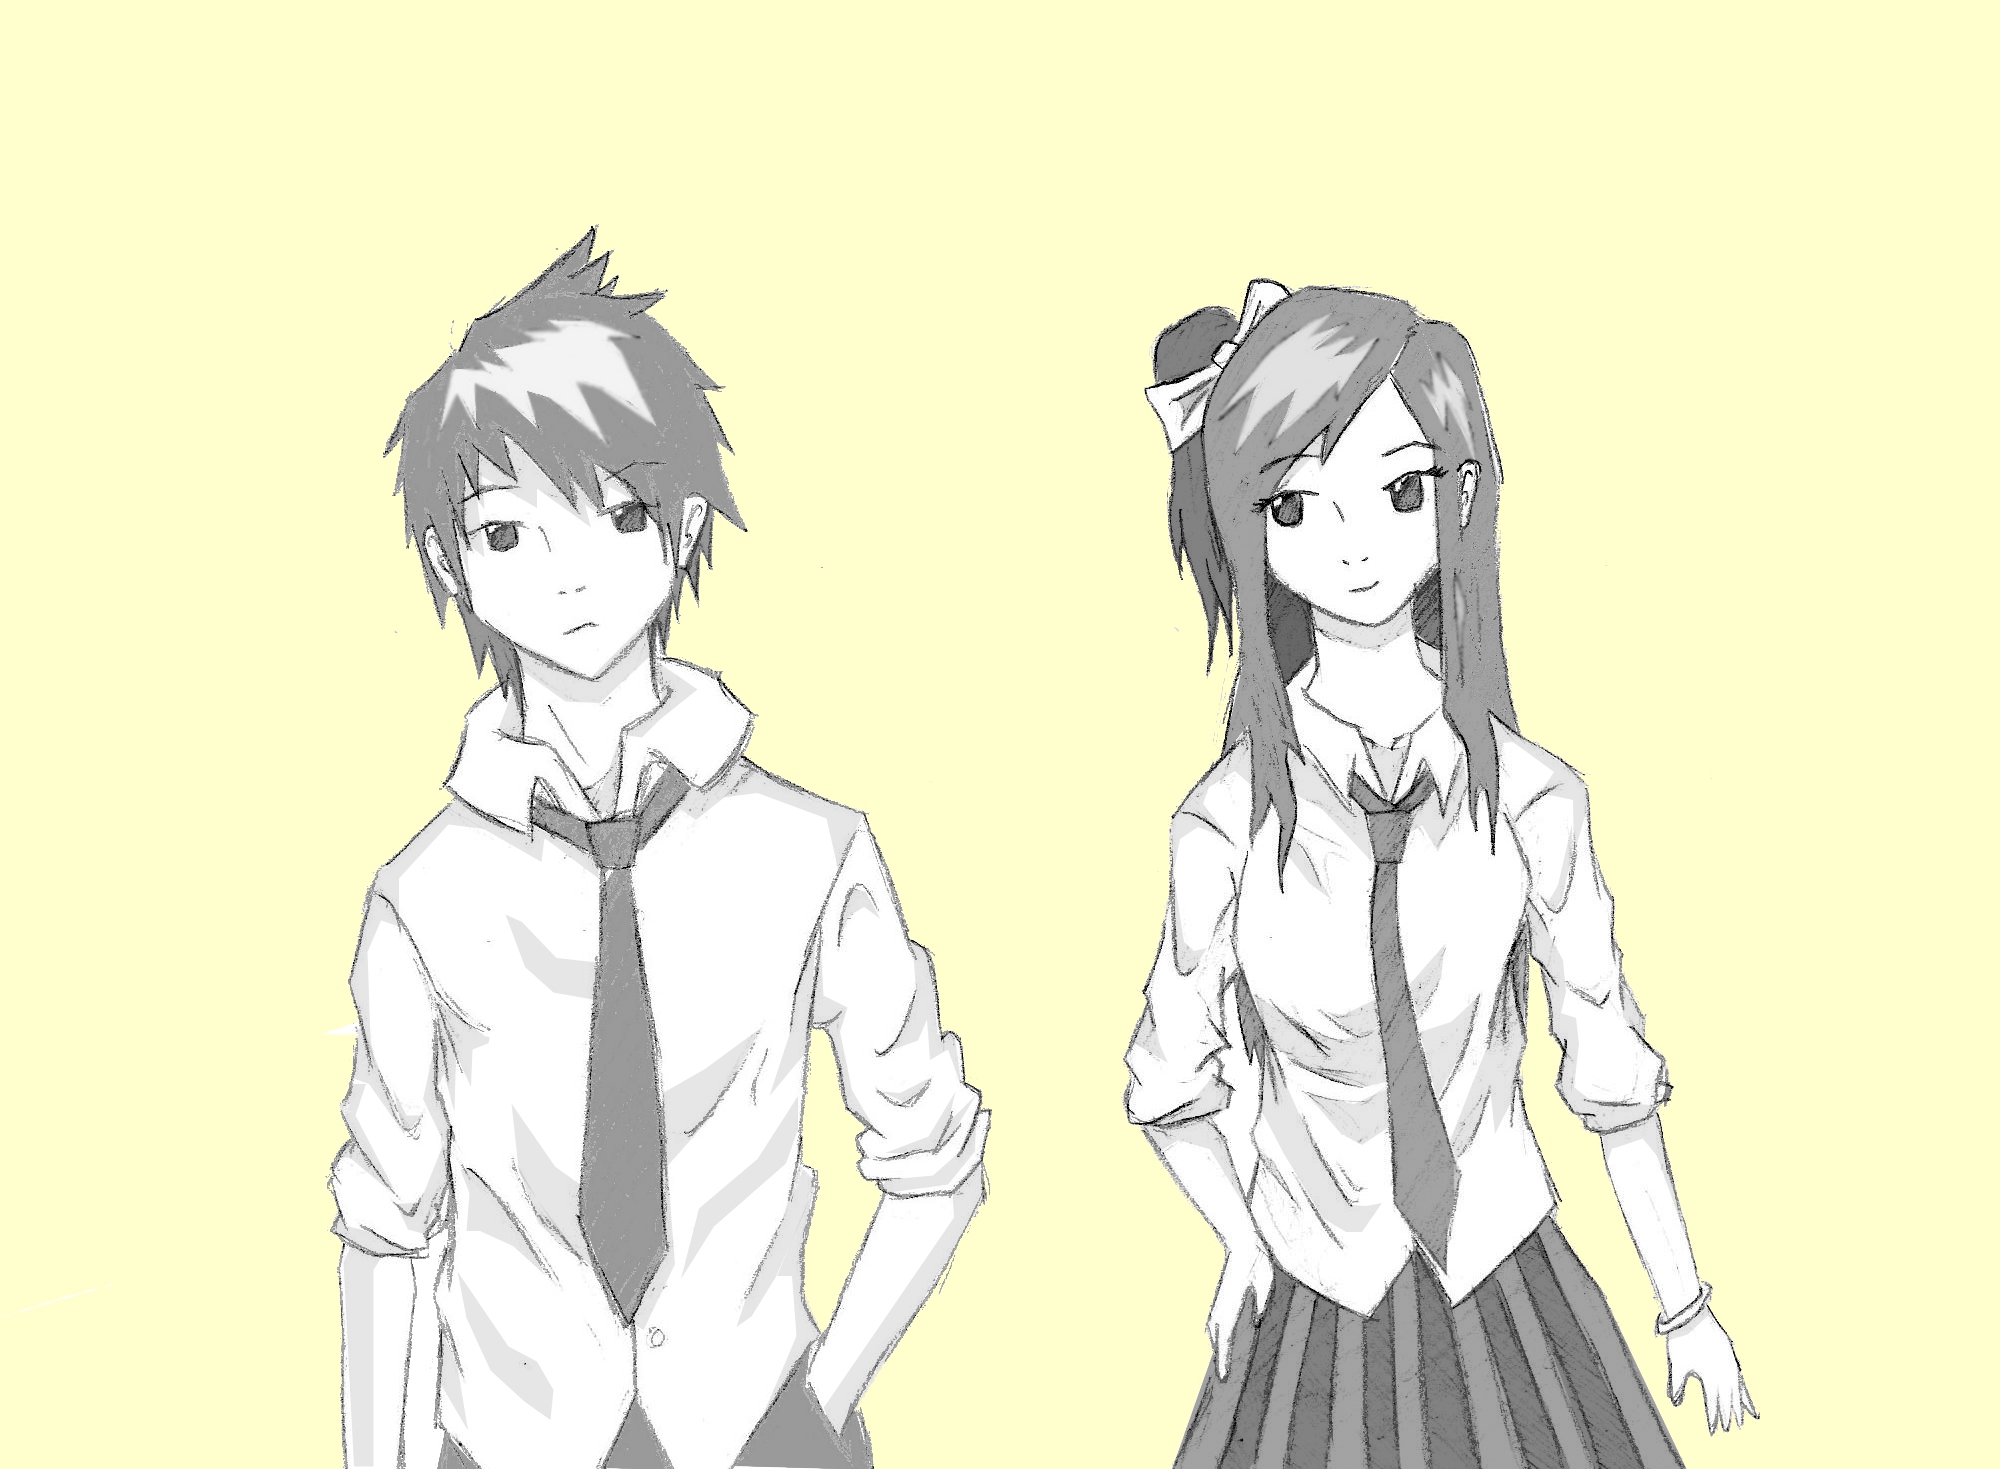 Boy and girl drawing image - Anime Fans of modDB - Mod DB